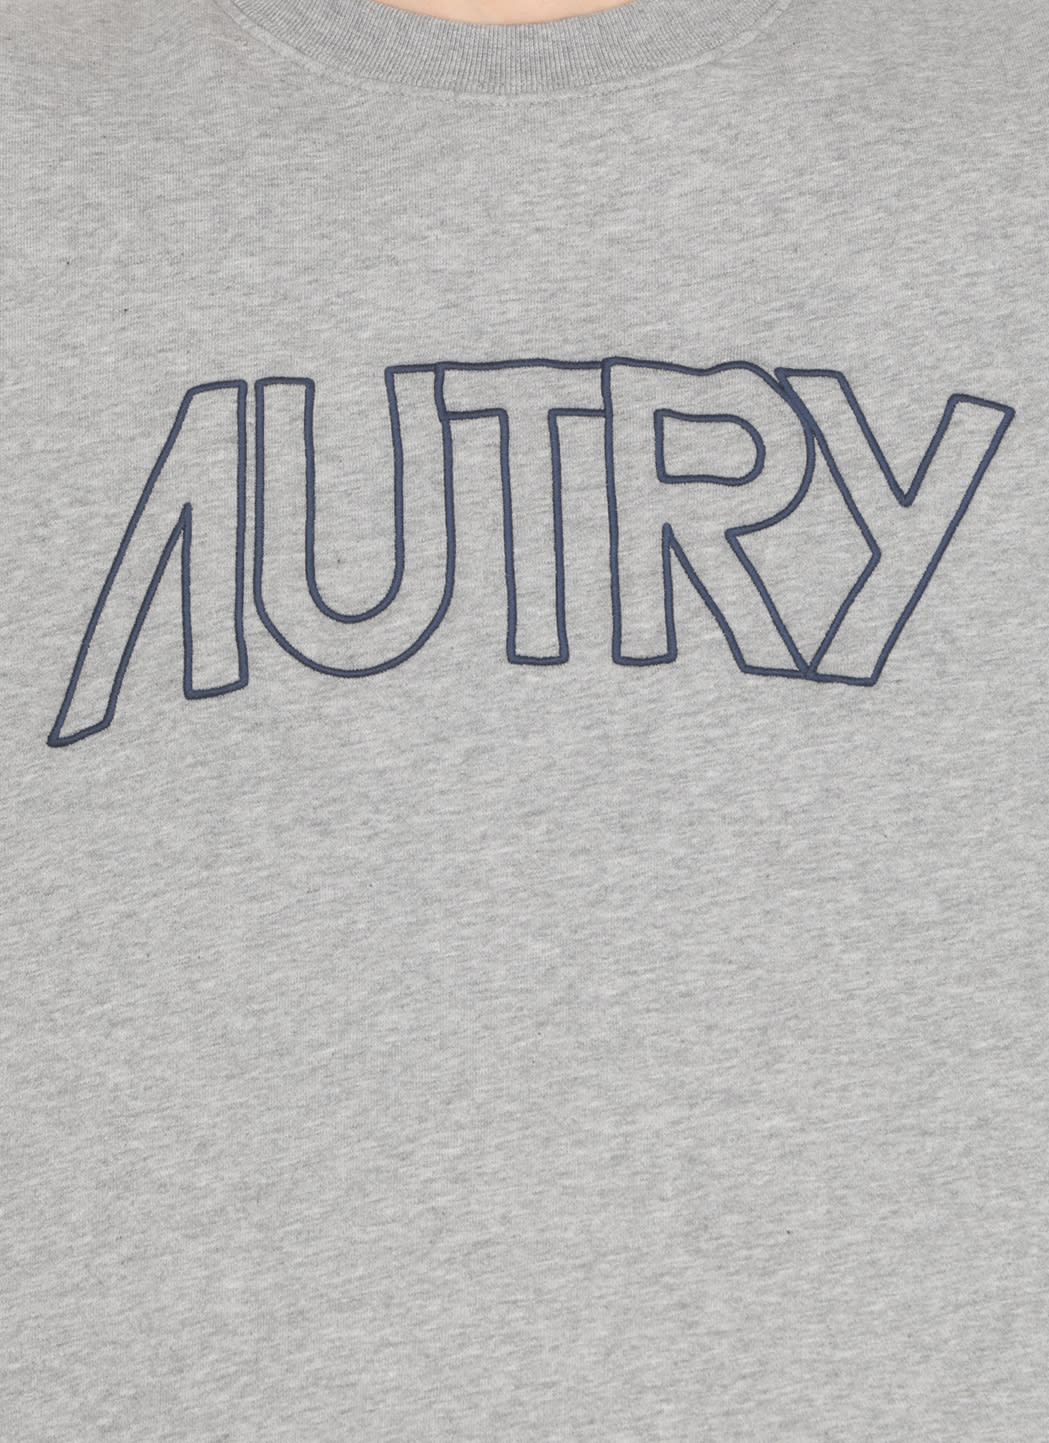 Shop Autry Sweatshirt With Logo In Grey